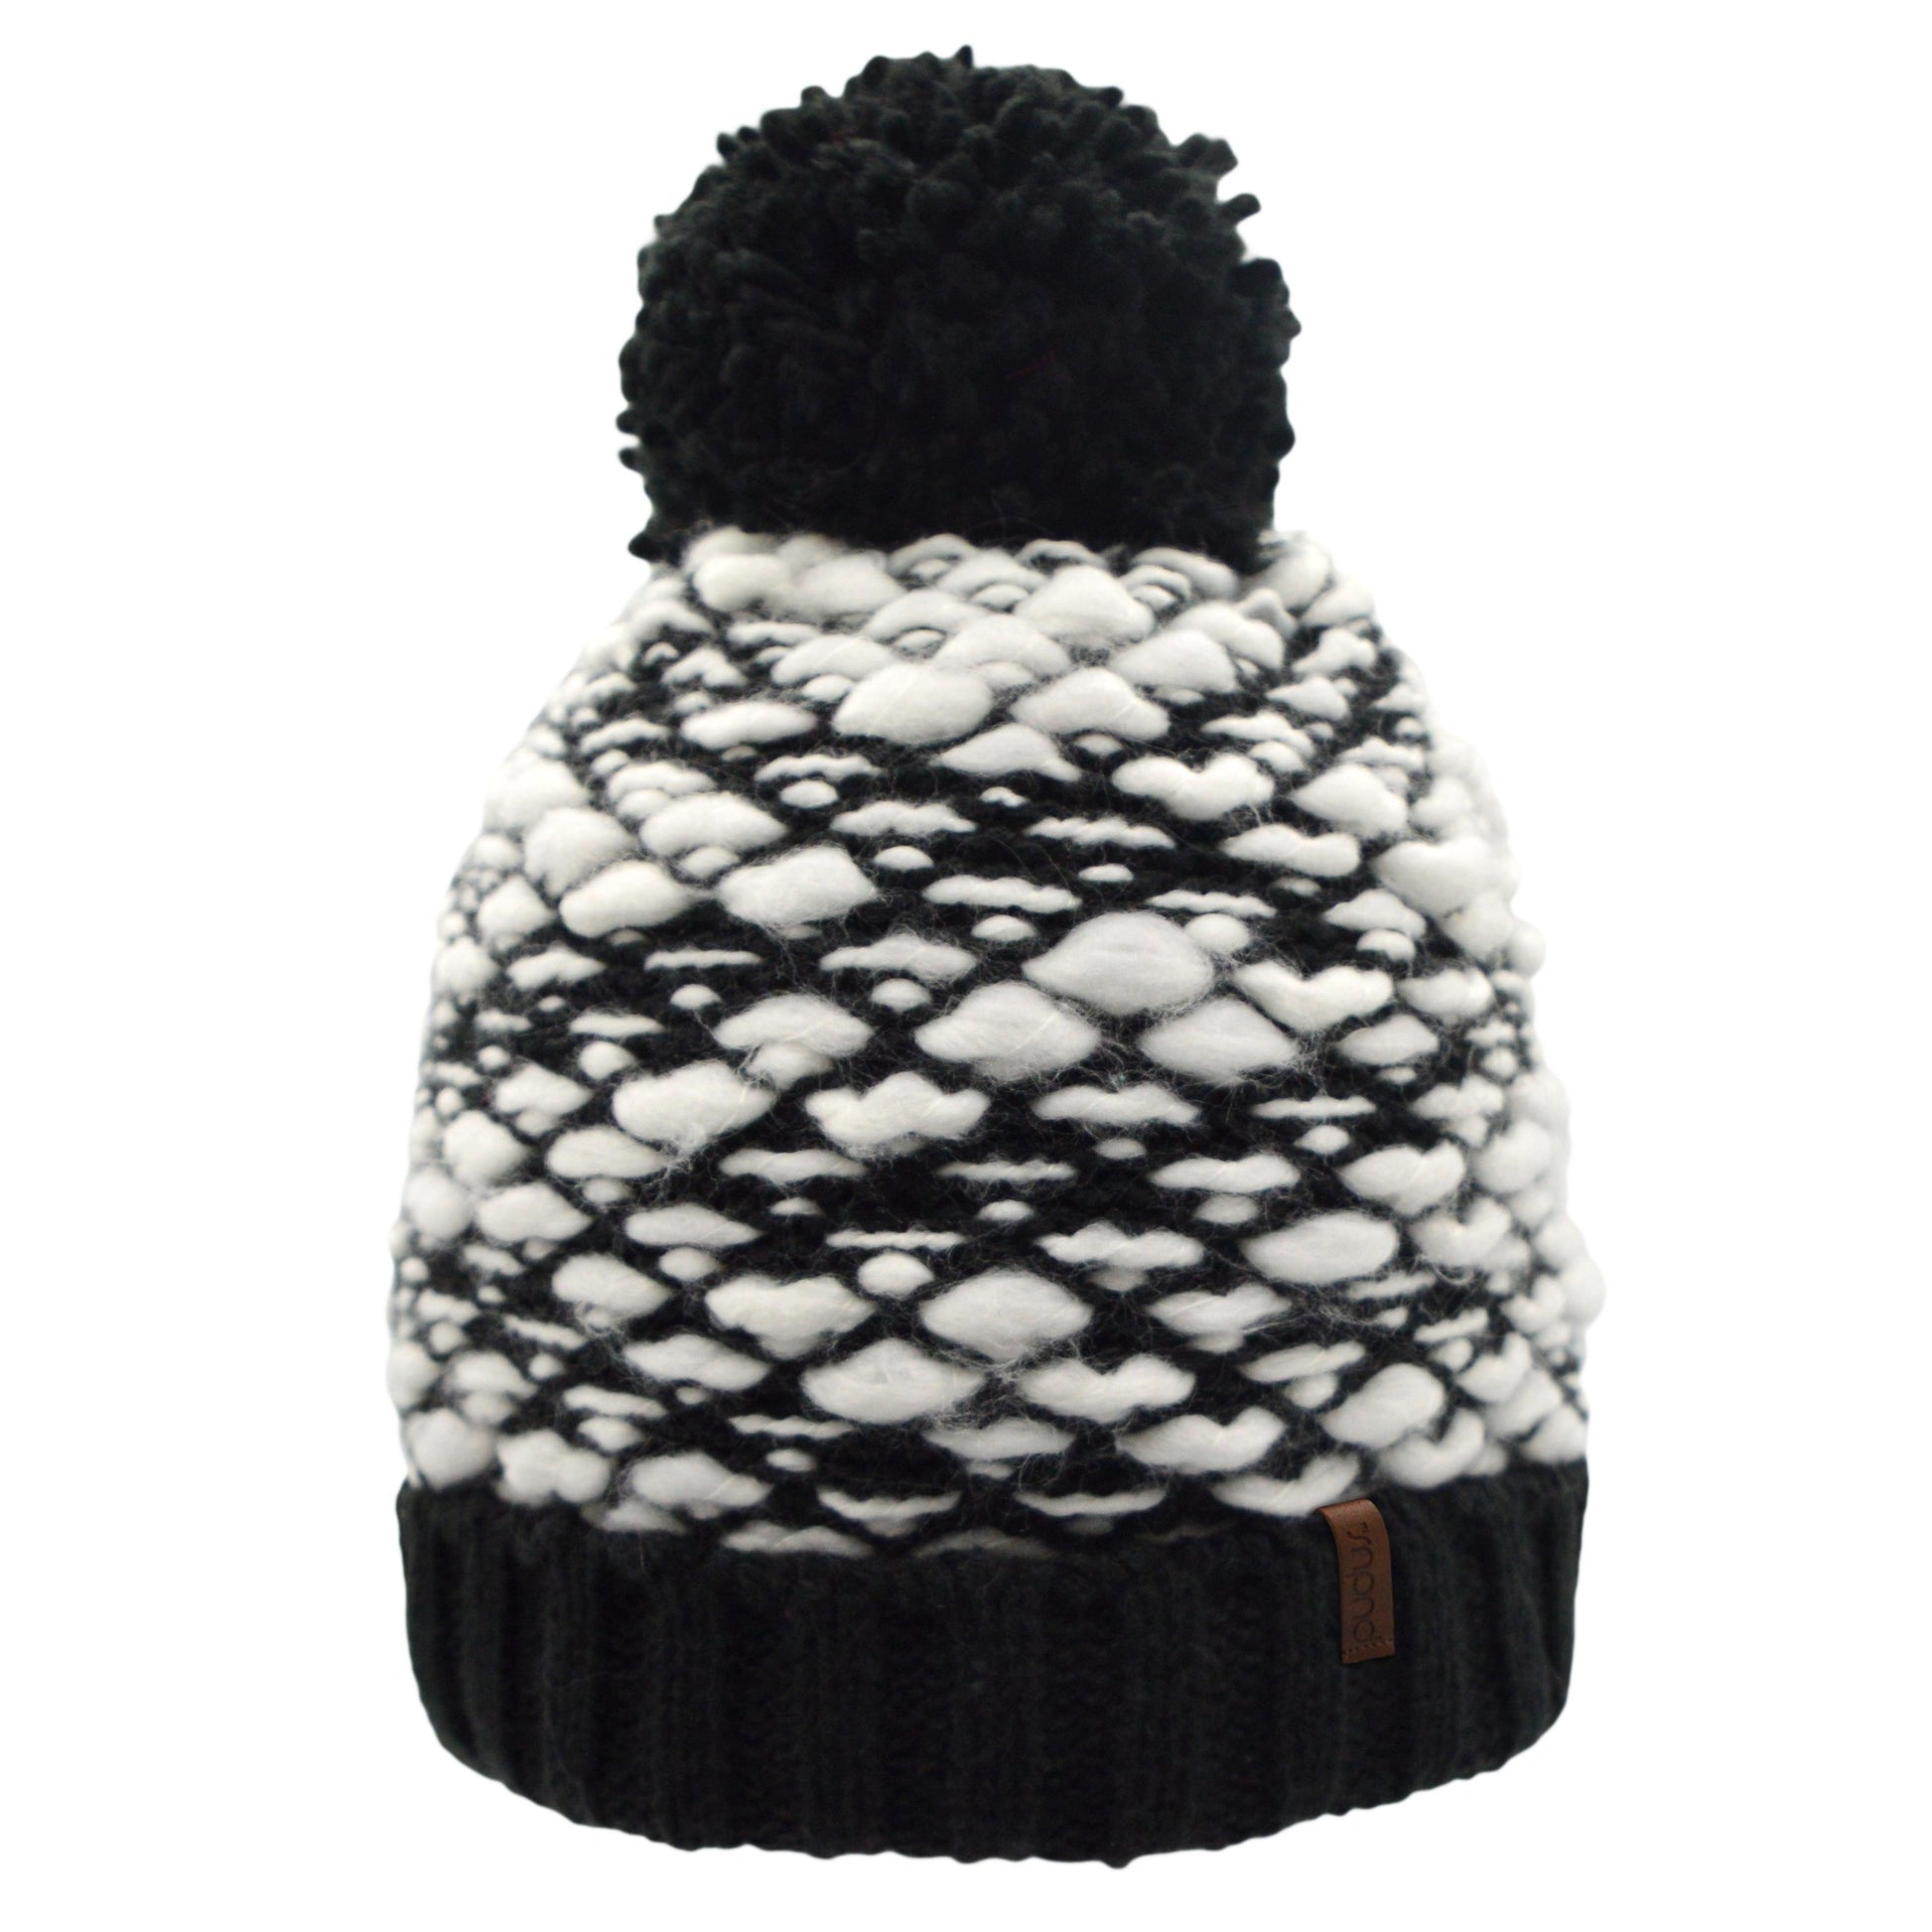 Beanie Winter Hat | Geometric Black by Pudus Lifestyle Co.